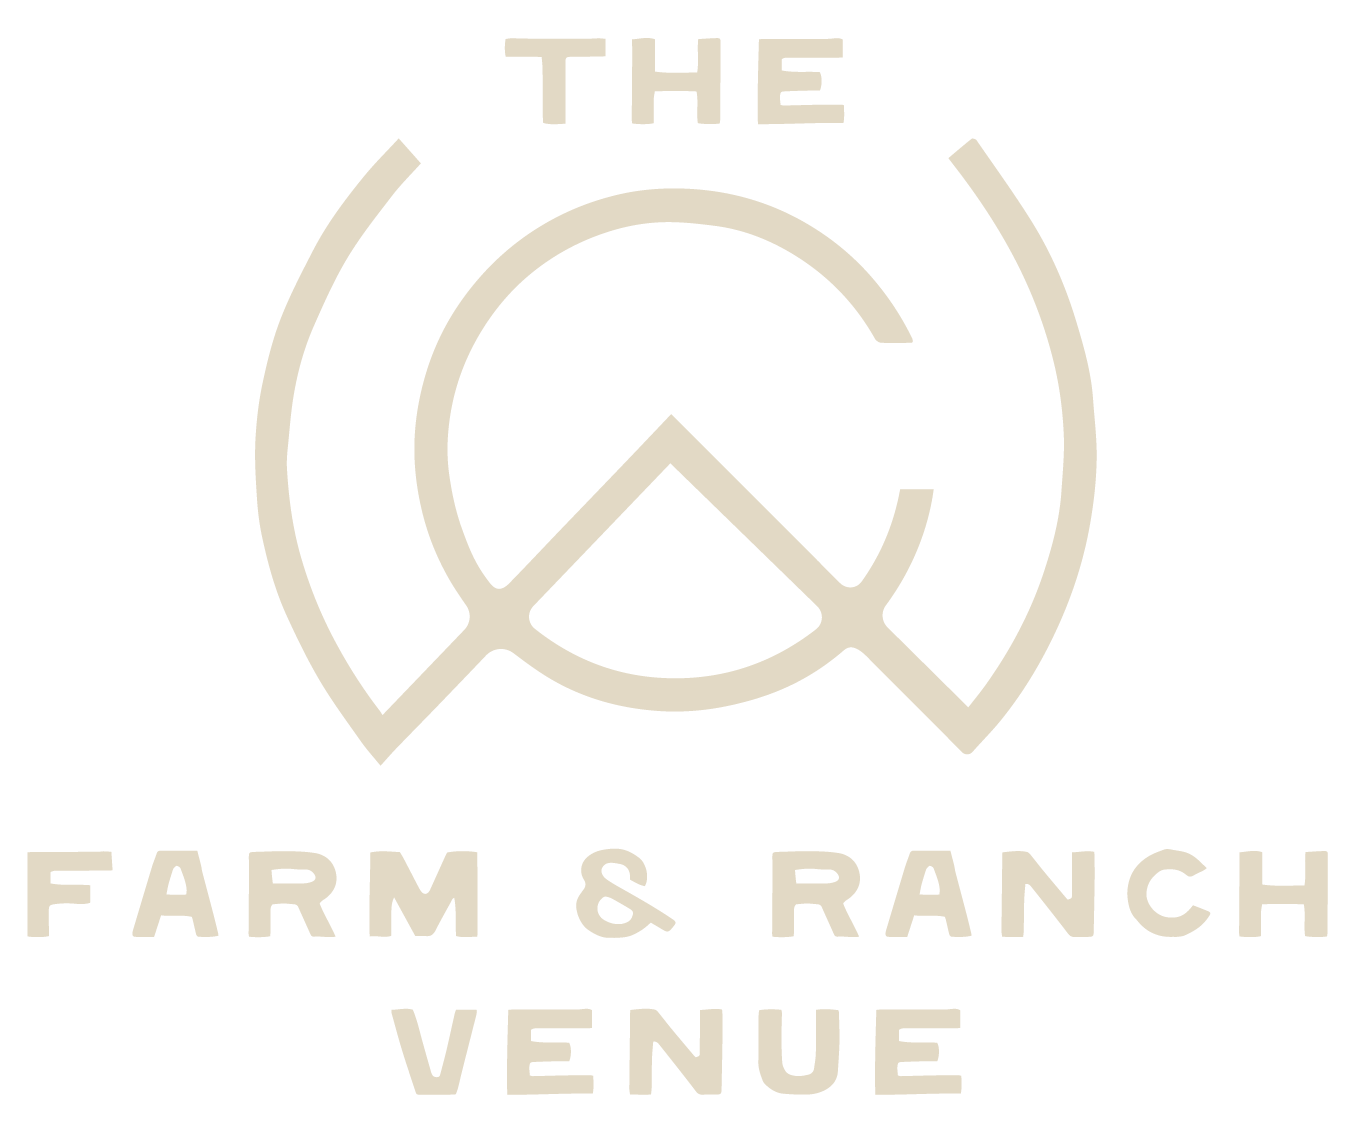 The CW Farm and Ranch Venue